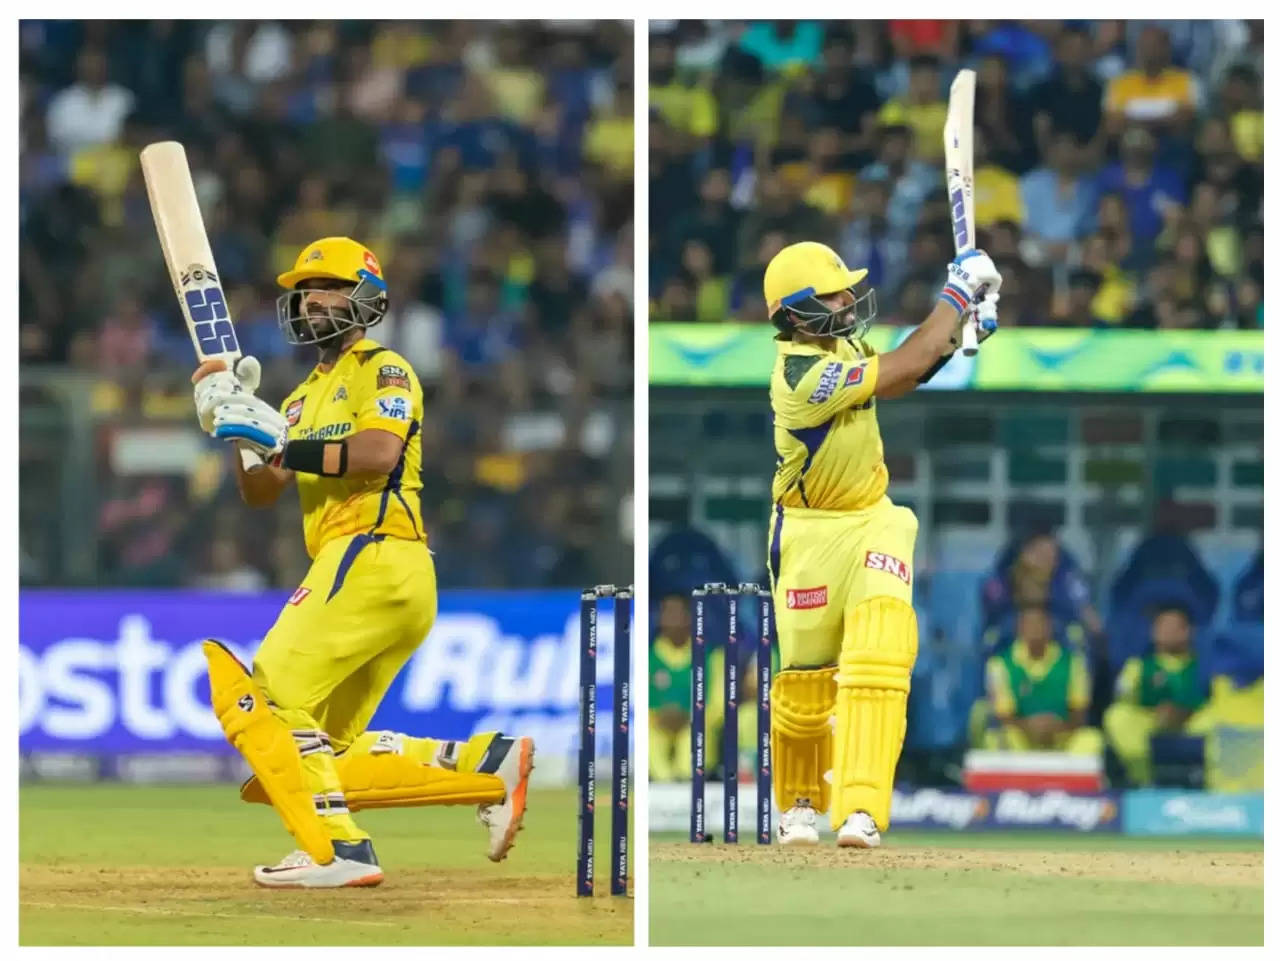 Ajinkya Rahane displayed some high-quality shots throughout the innings.